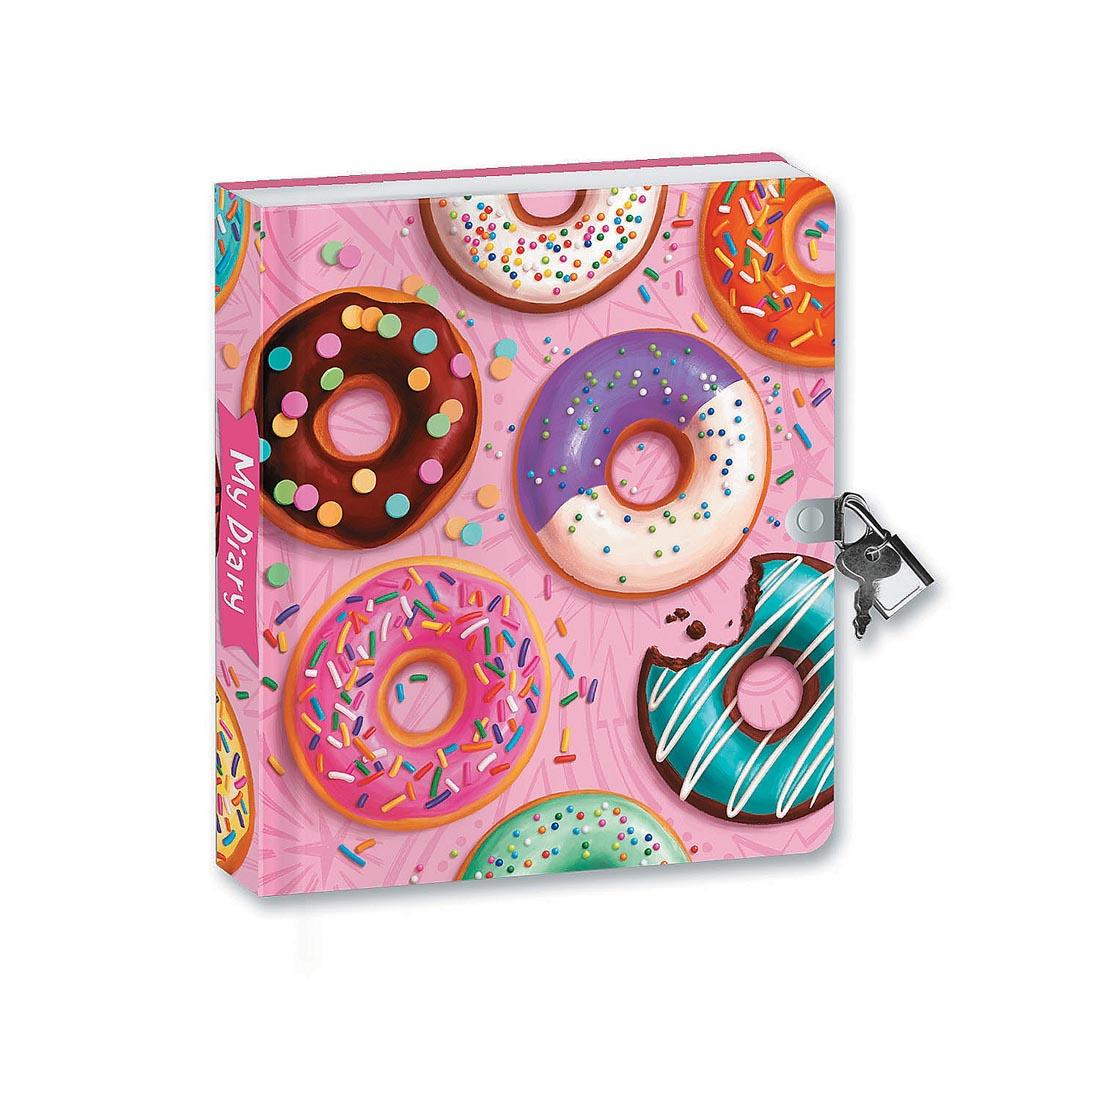 Donut Glitter Lock & Key Diary by Peaceable Kingdom